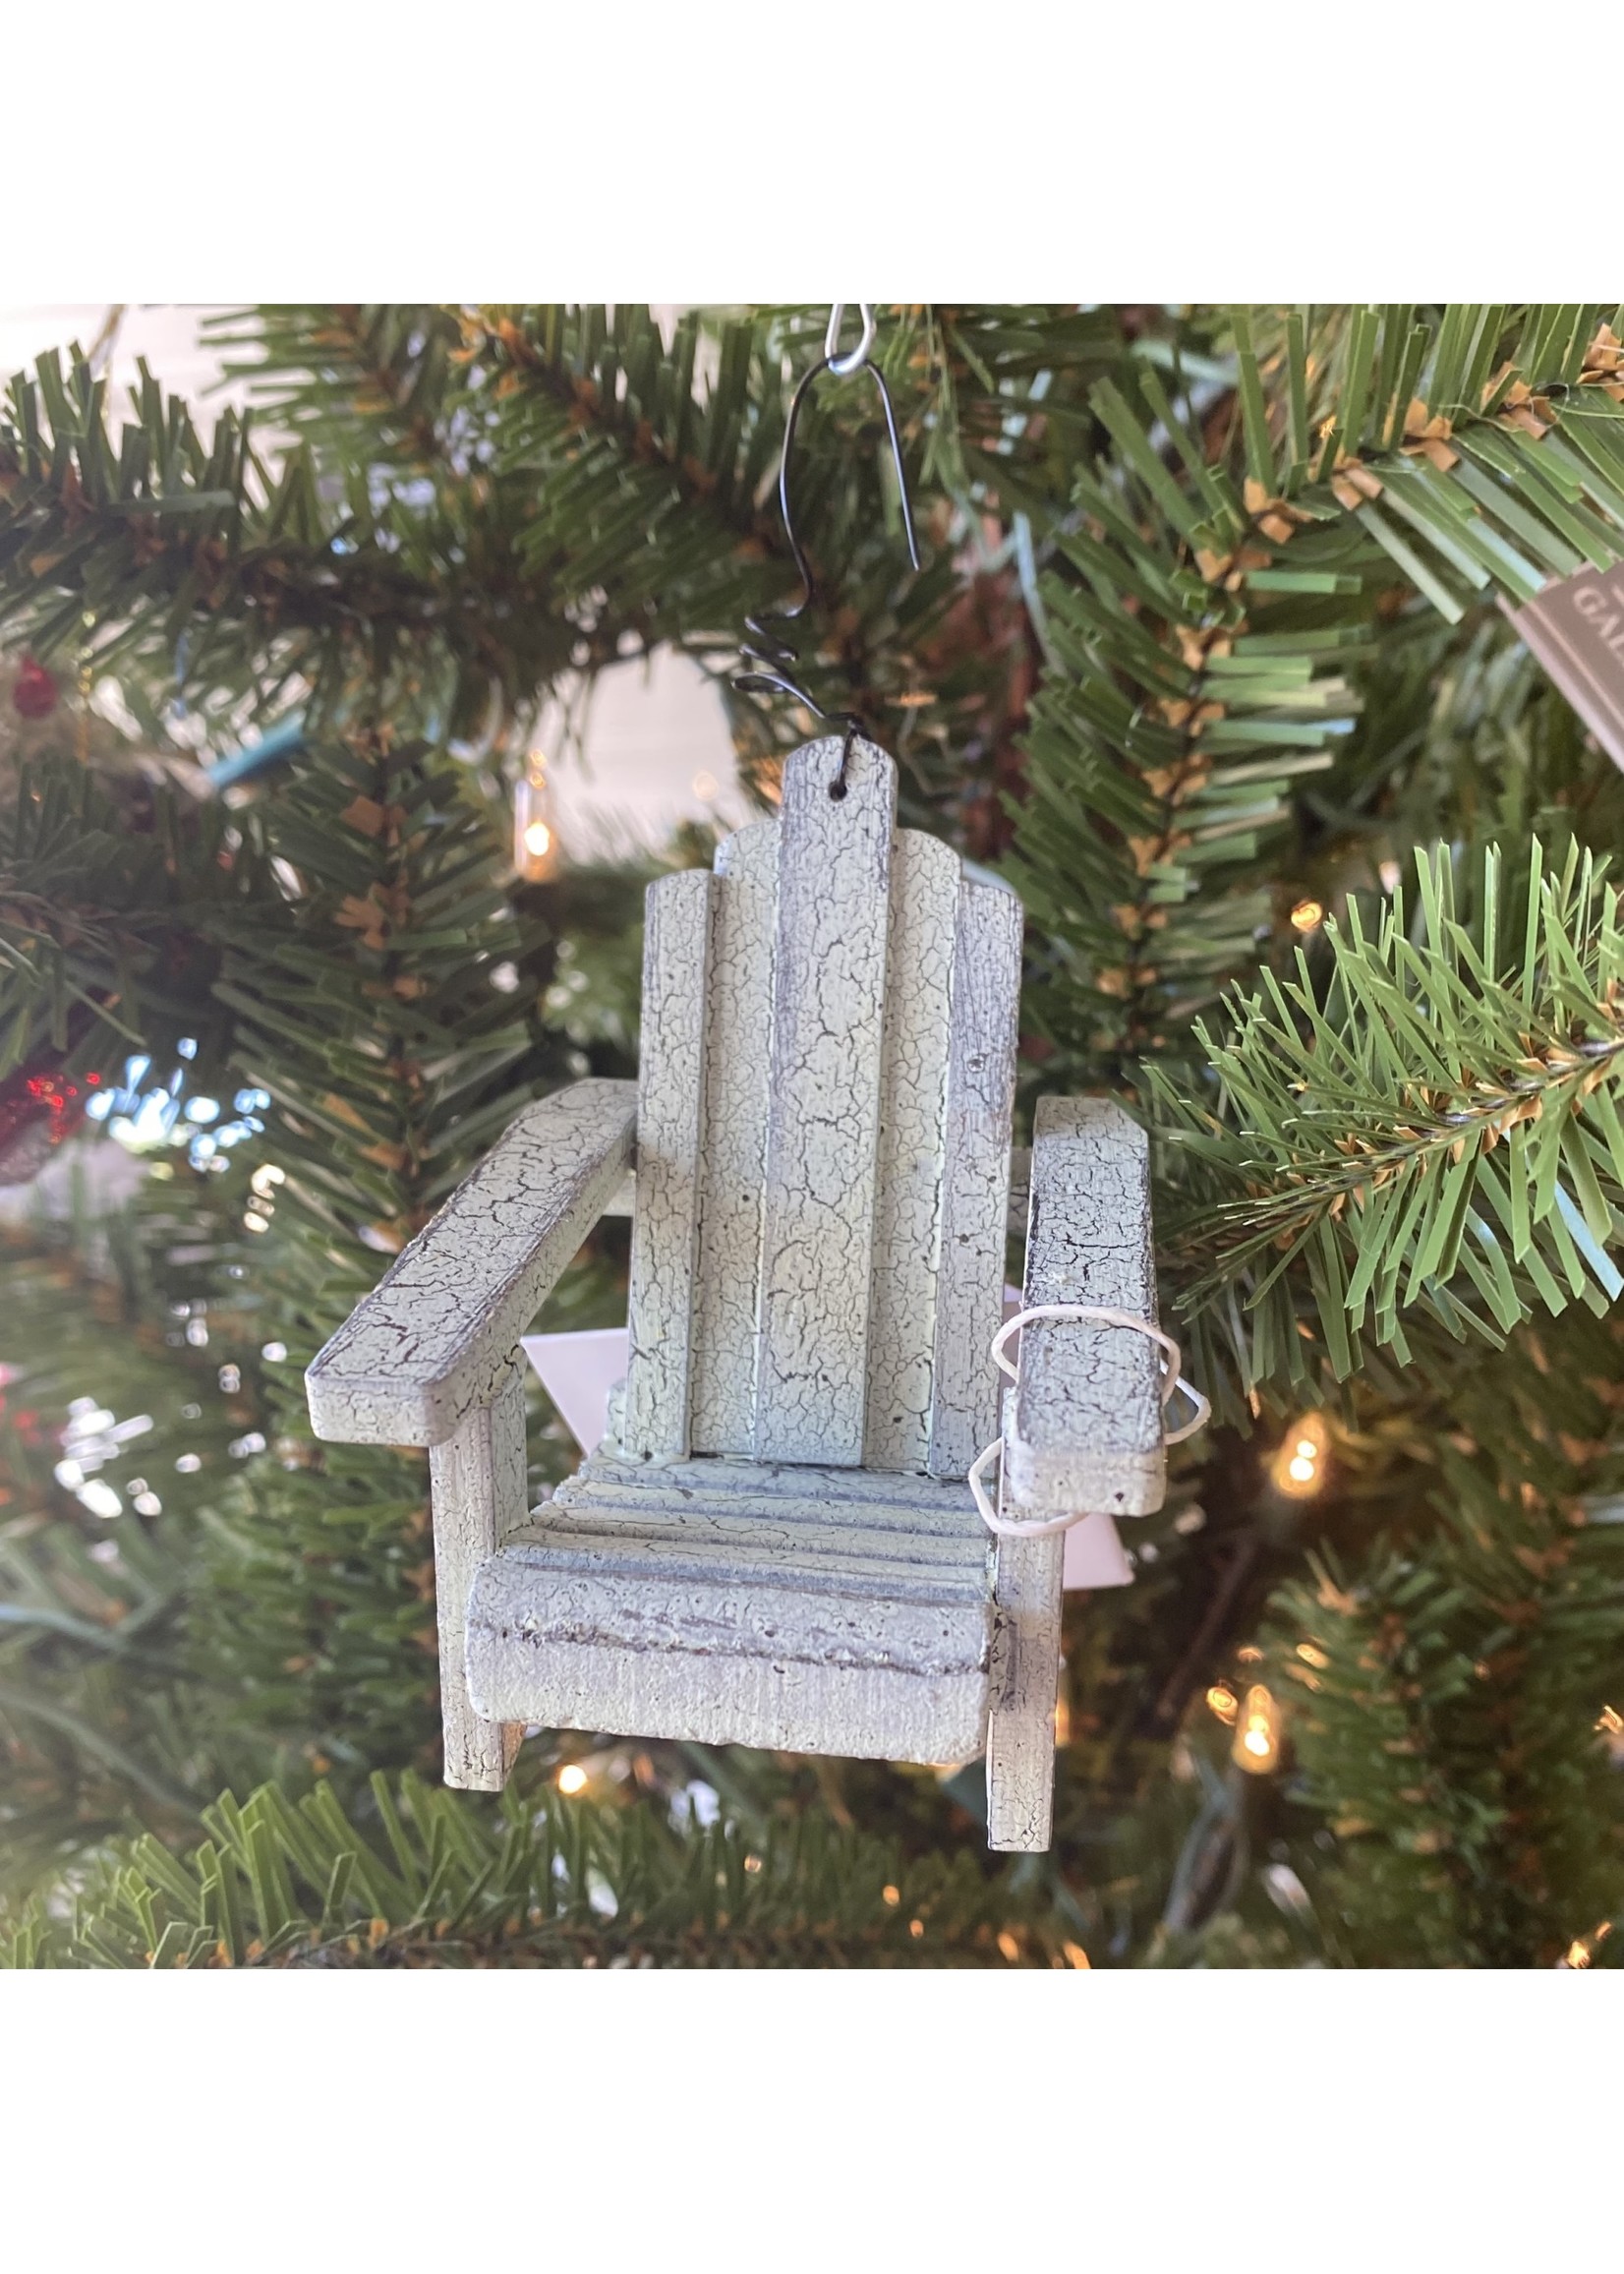 Primitives by Kathy Beach Chair Ornament